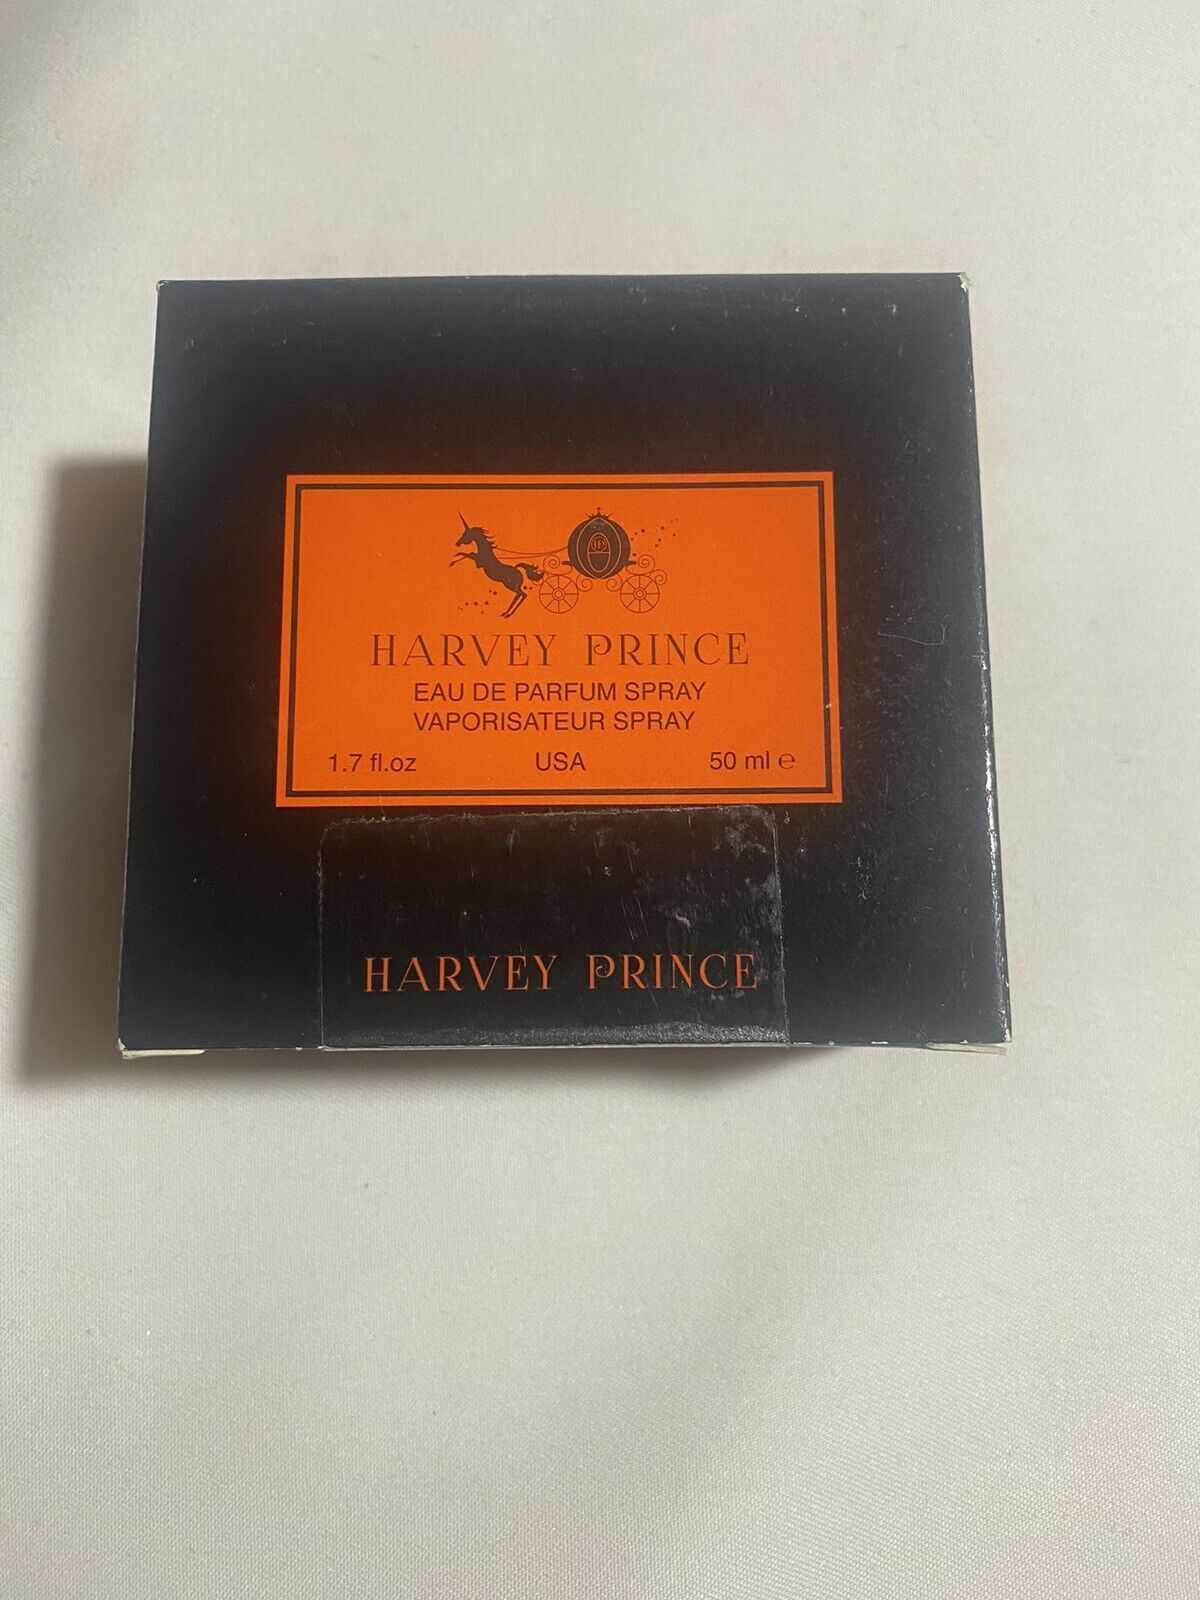 Harvey Prince Petaly Noir 1.7oz Eau de Parfum Spray Brand New In Box For Women - $62.77